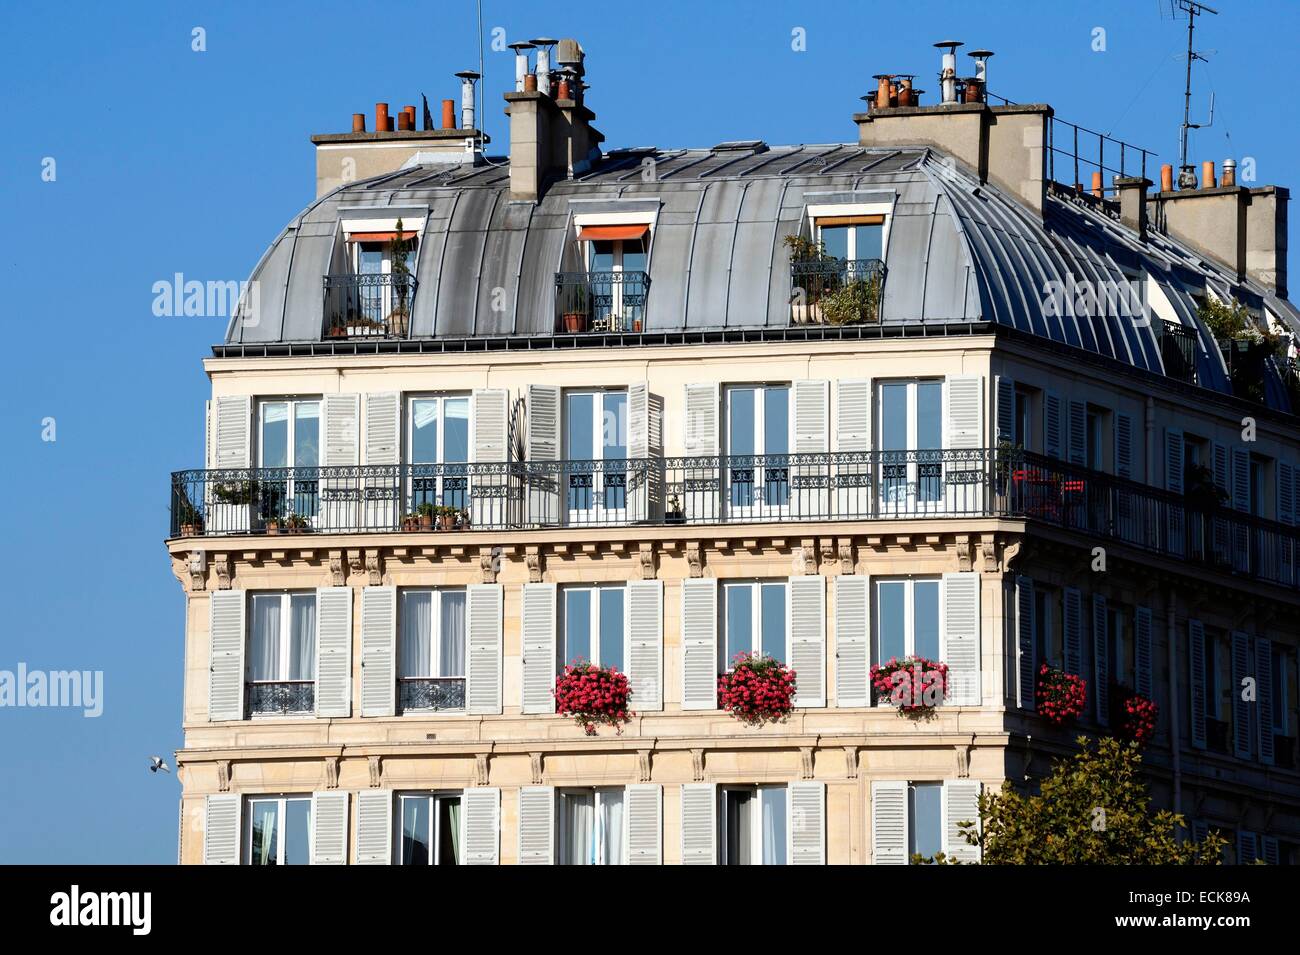 France, Paris, building facade, Daumesnil square Stock Photo